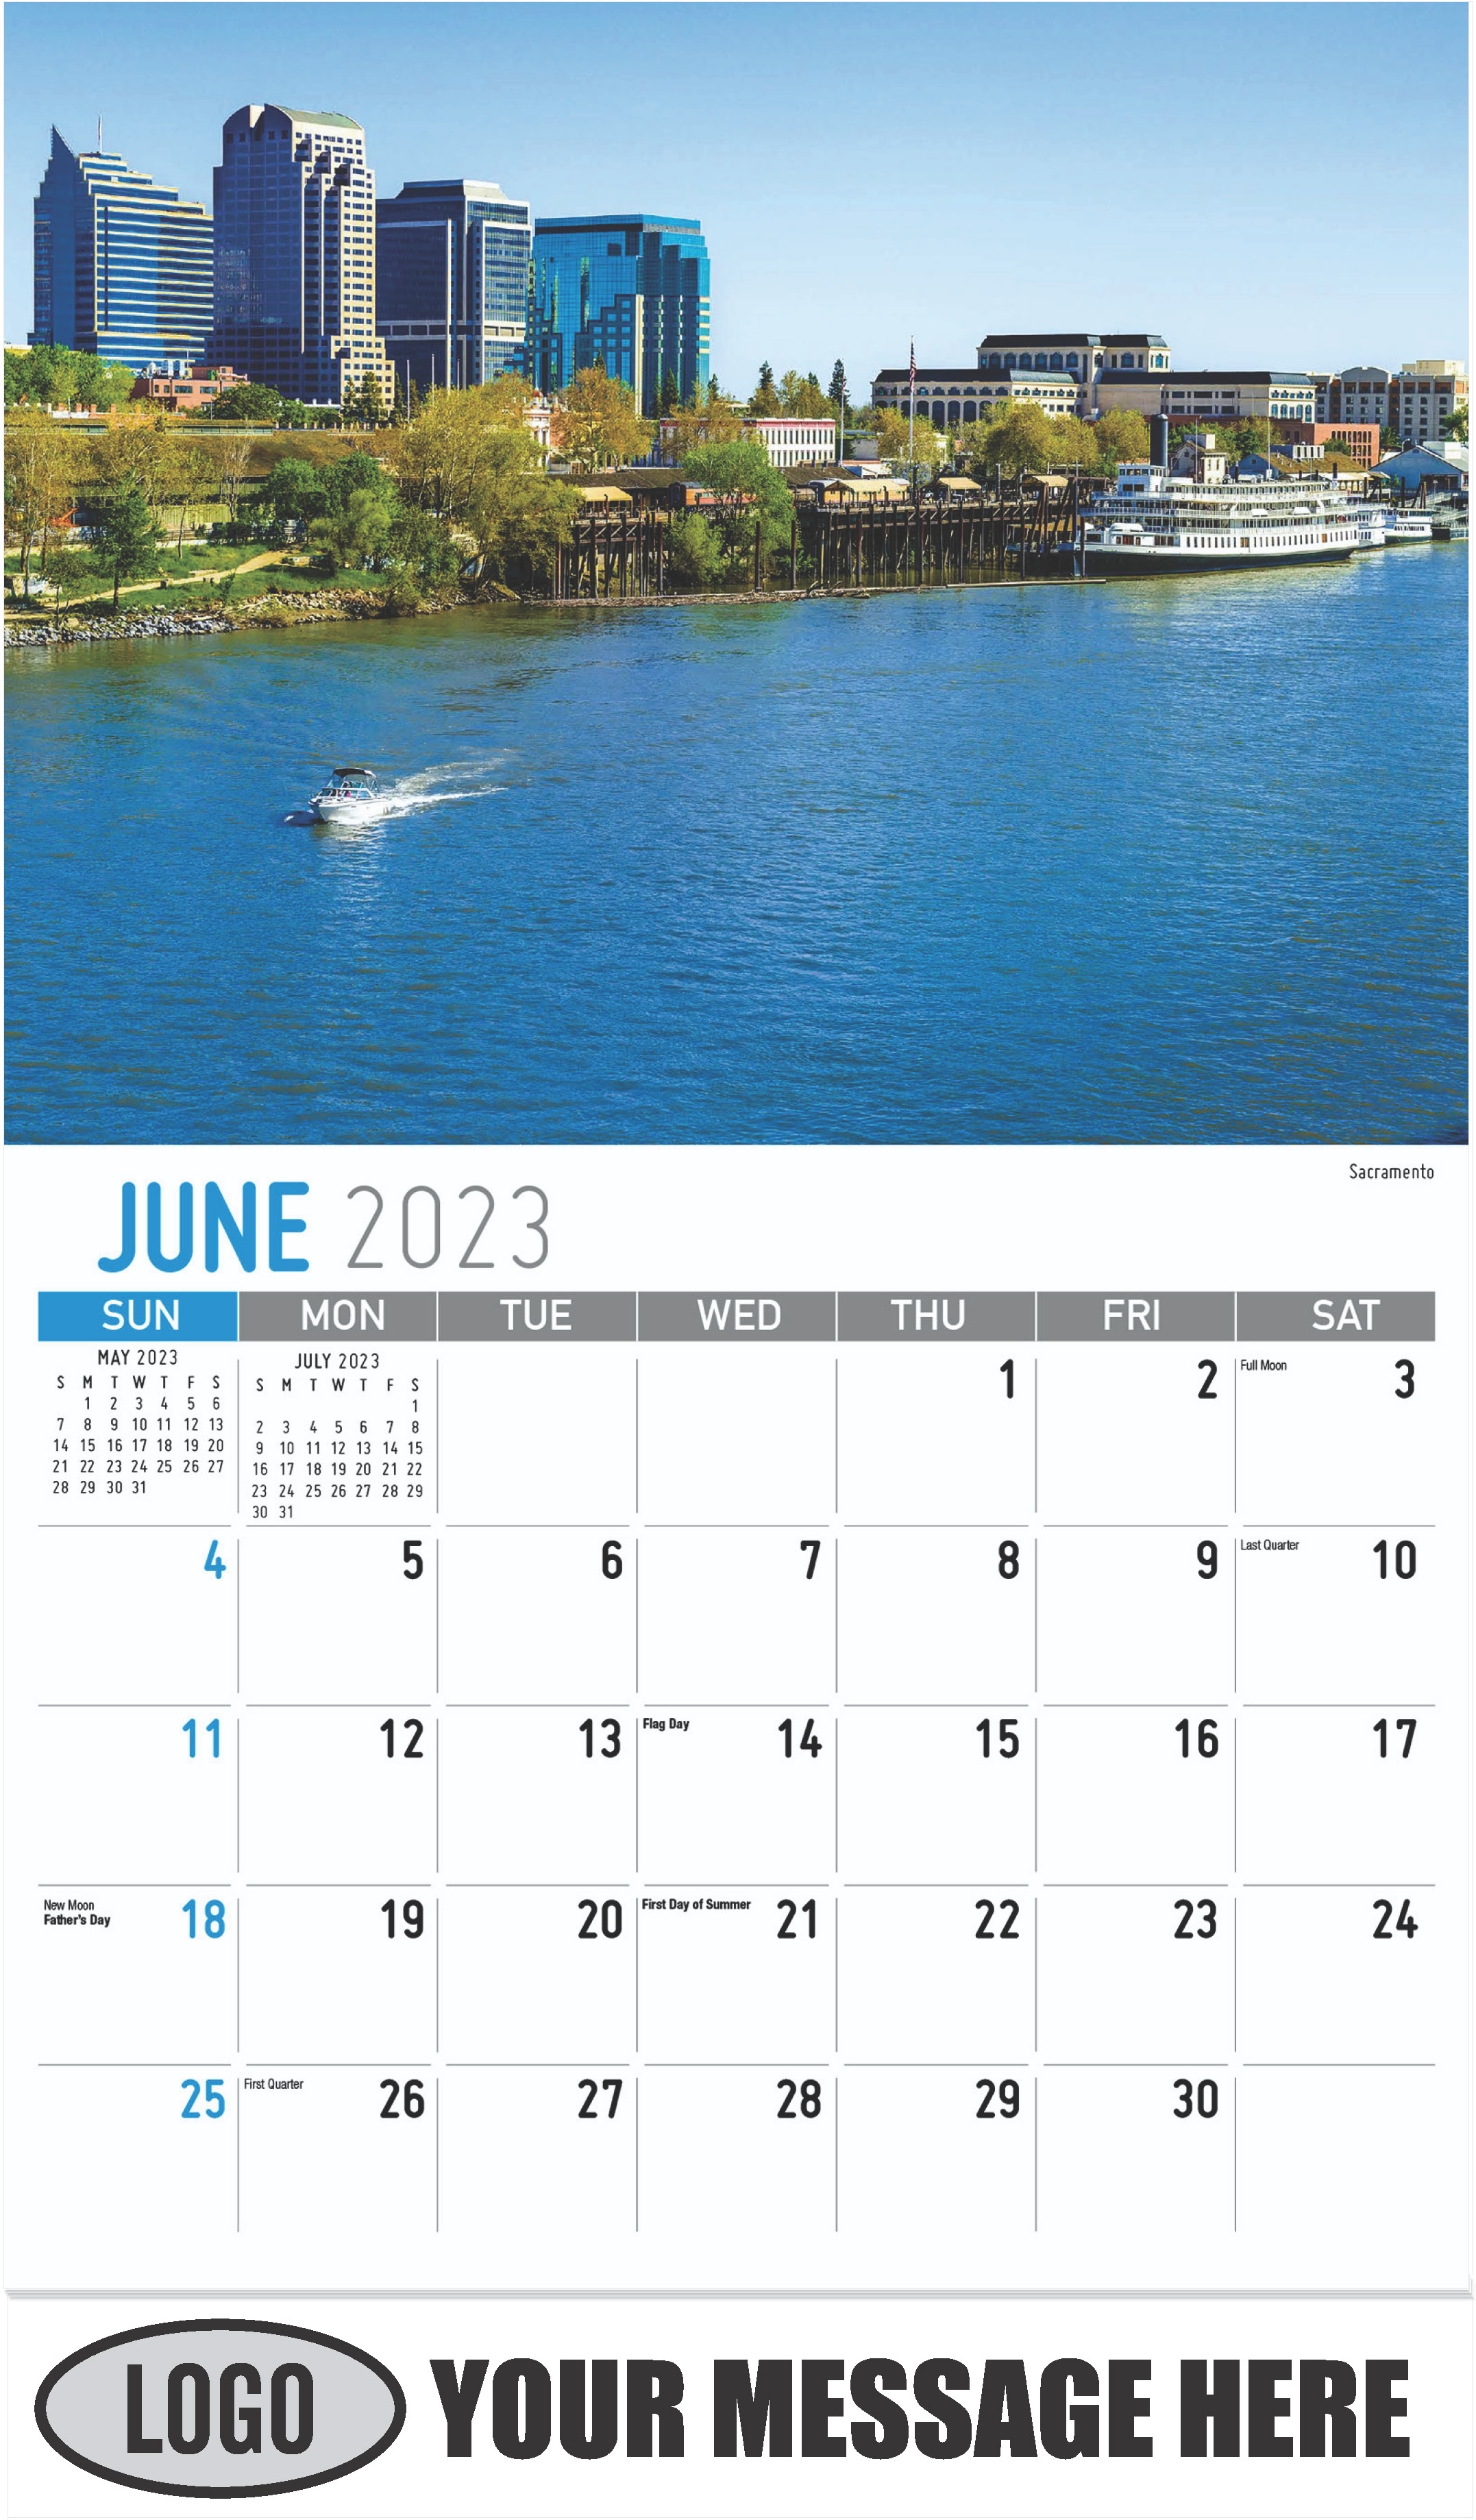 Sacramento - June - Scenes of California 2023 Promotional Calendar